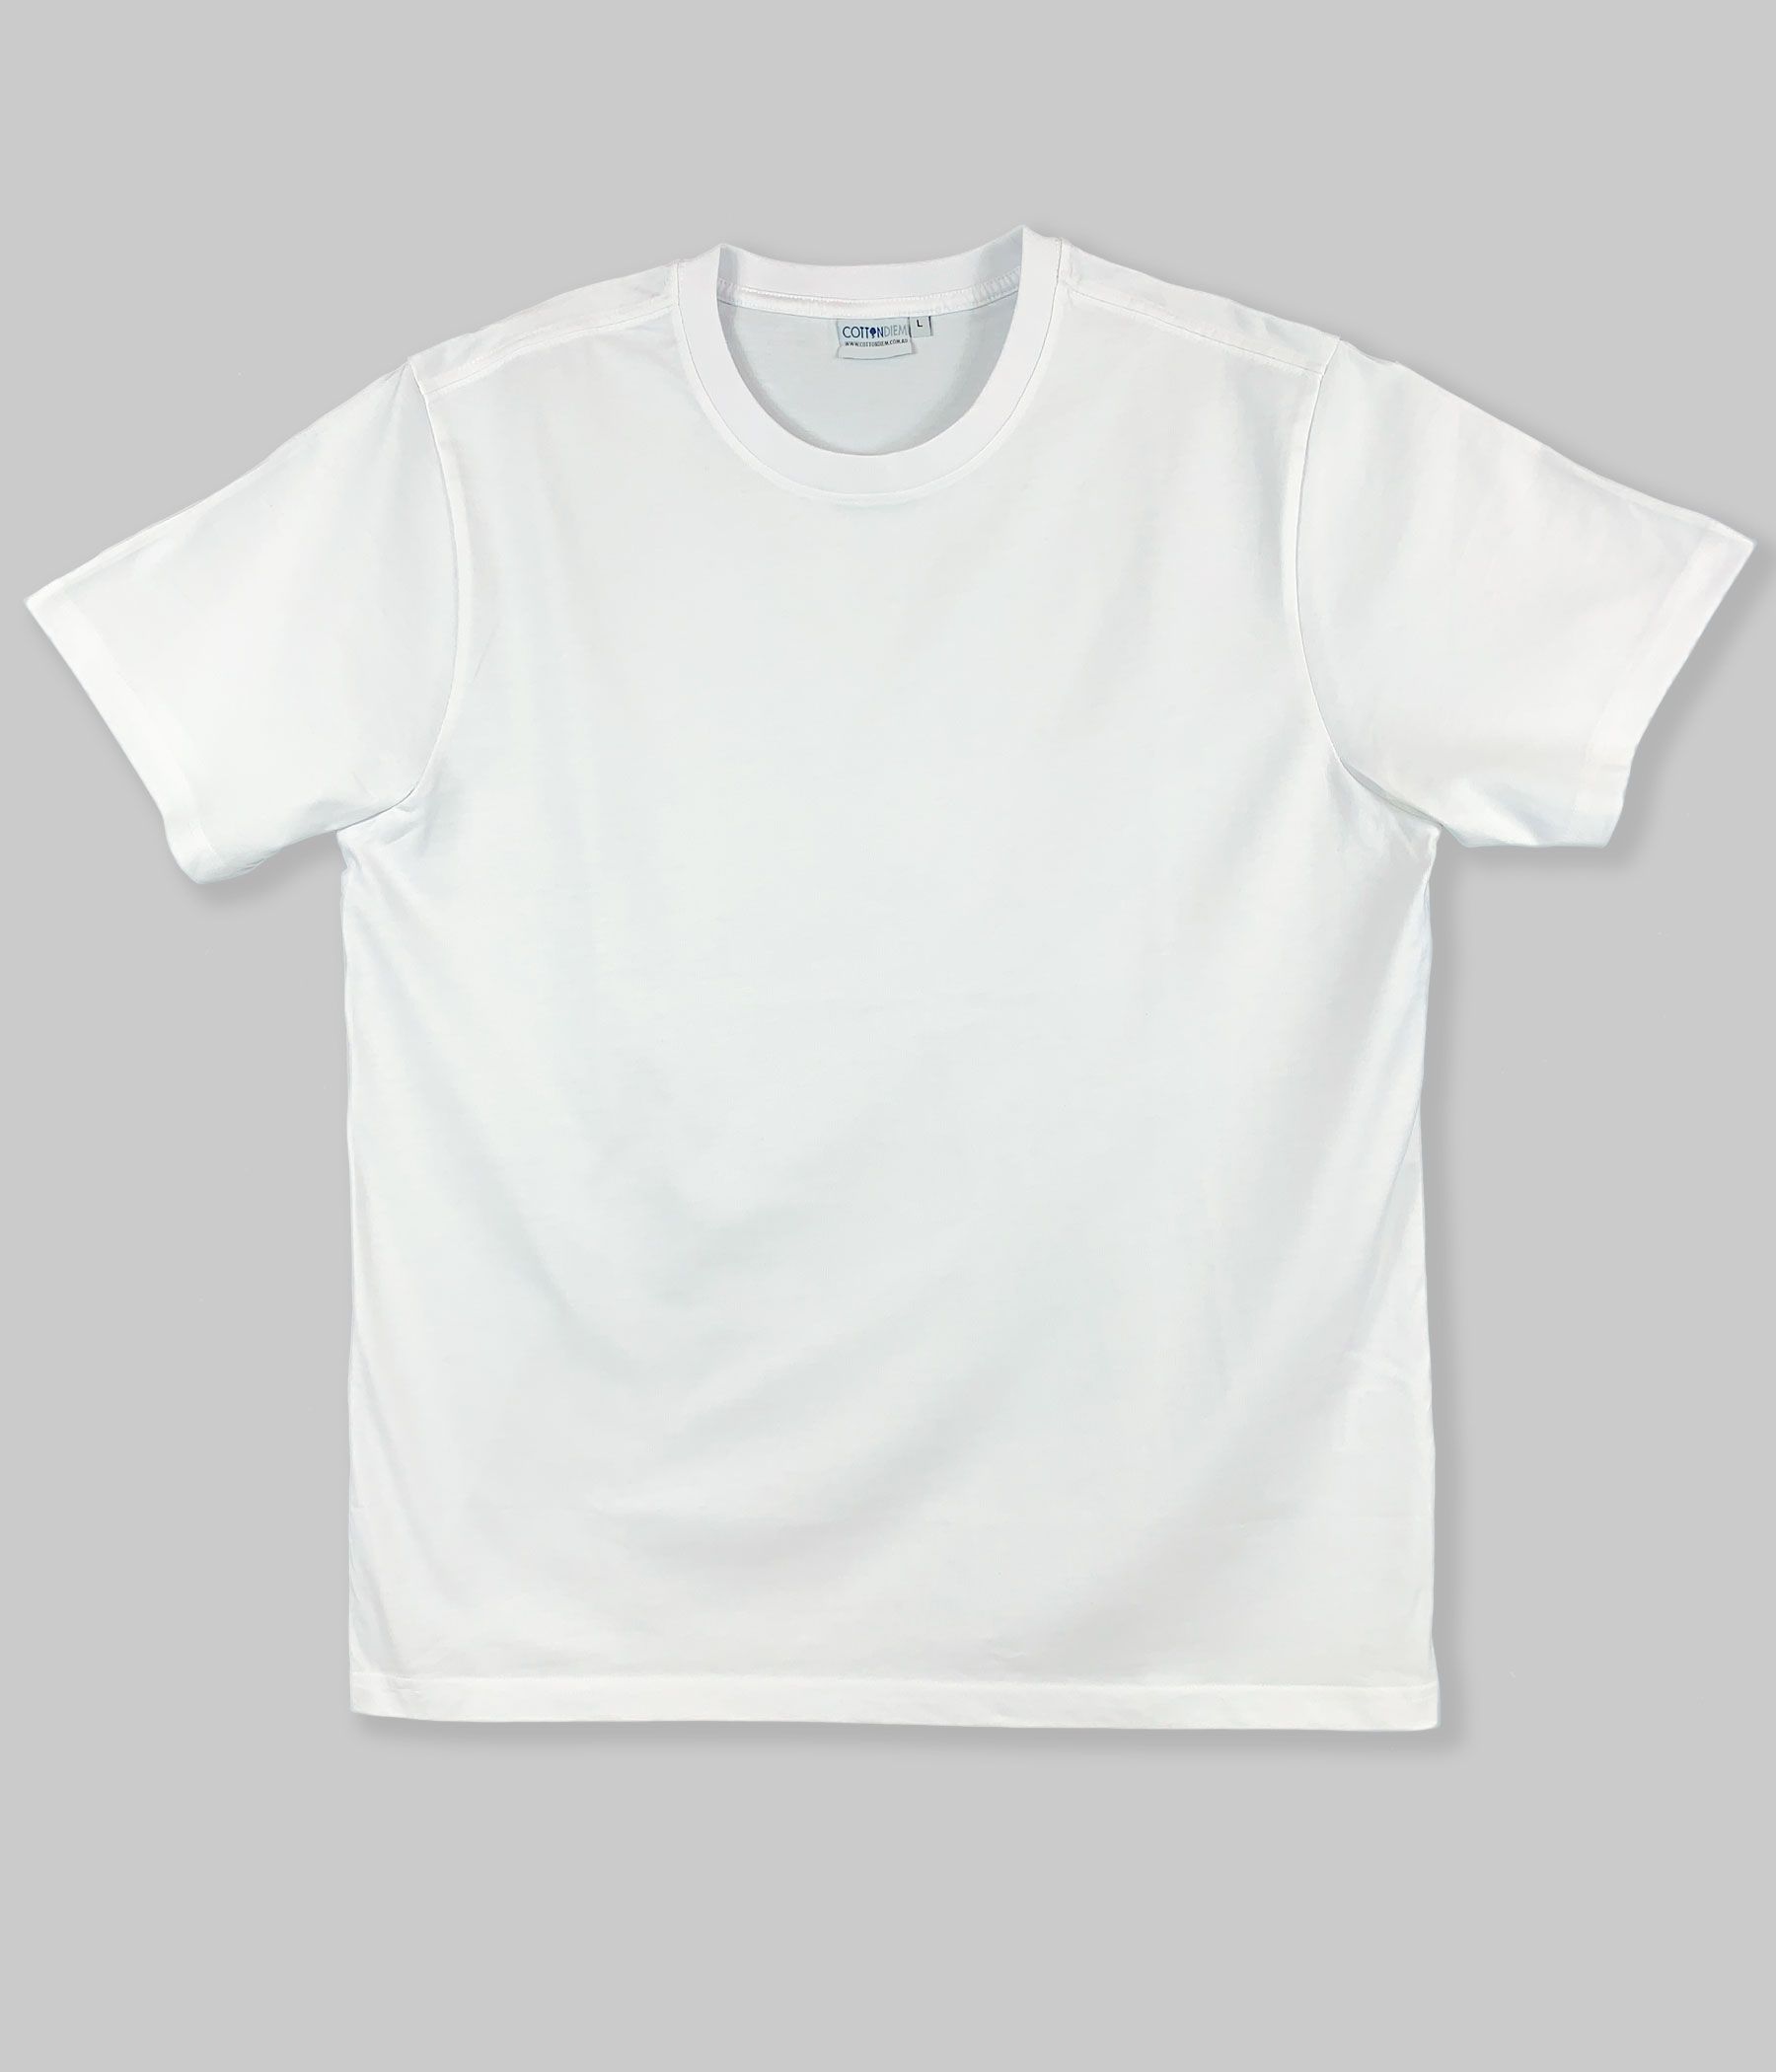 Blank plain white t-shirts – 200 GSM